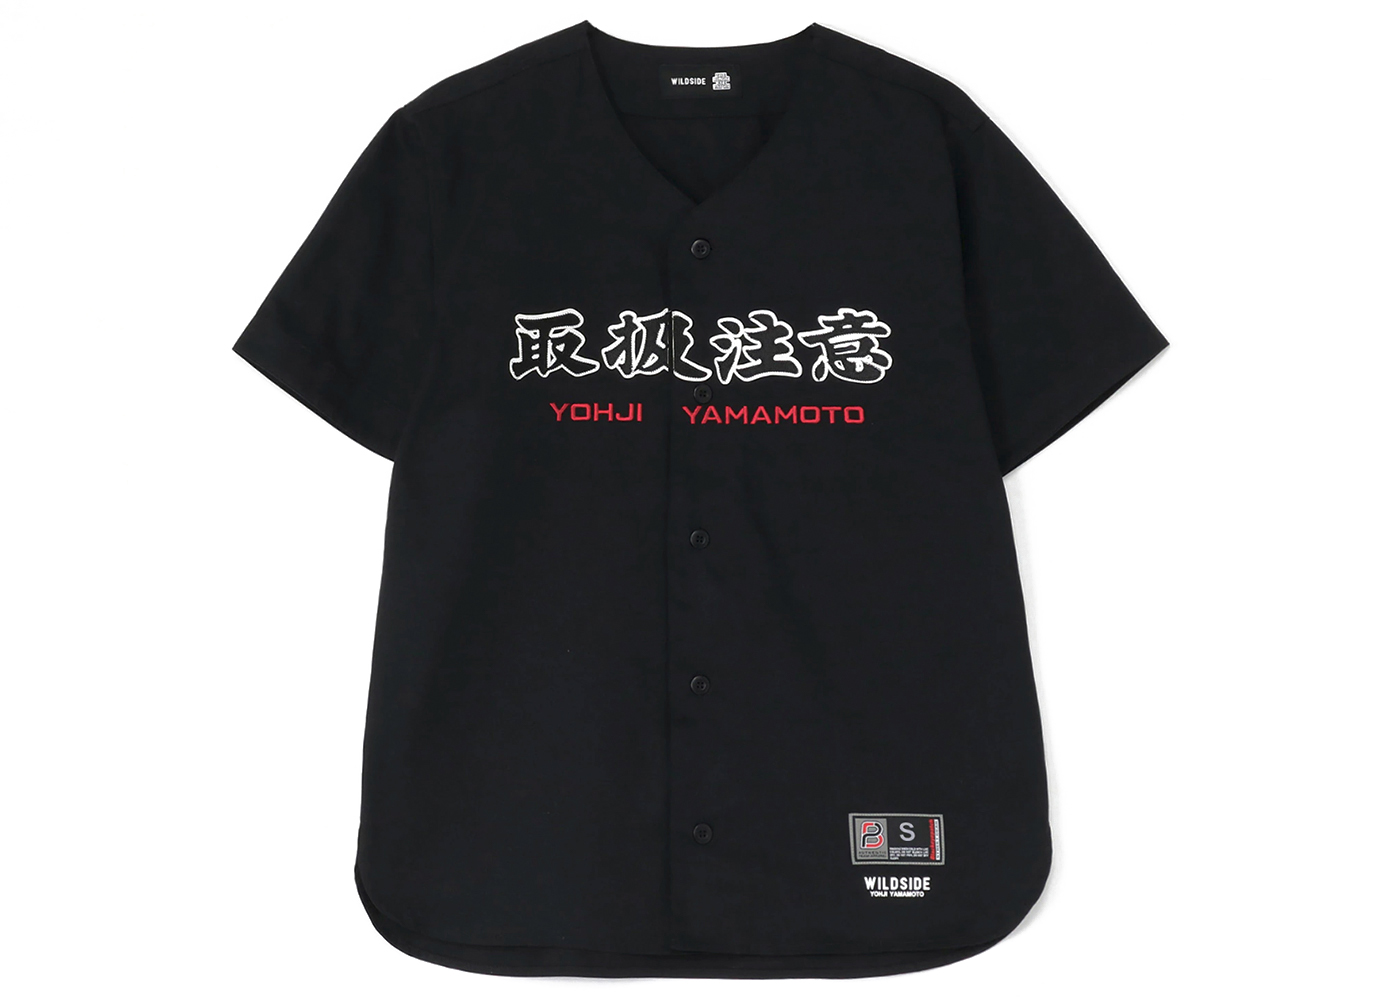 BlackEyePatch x Wildside Yohji Yamamoto Baseball Shirt Black ...